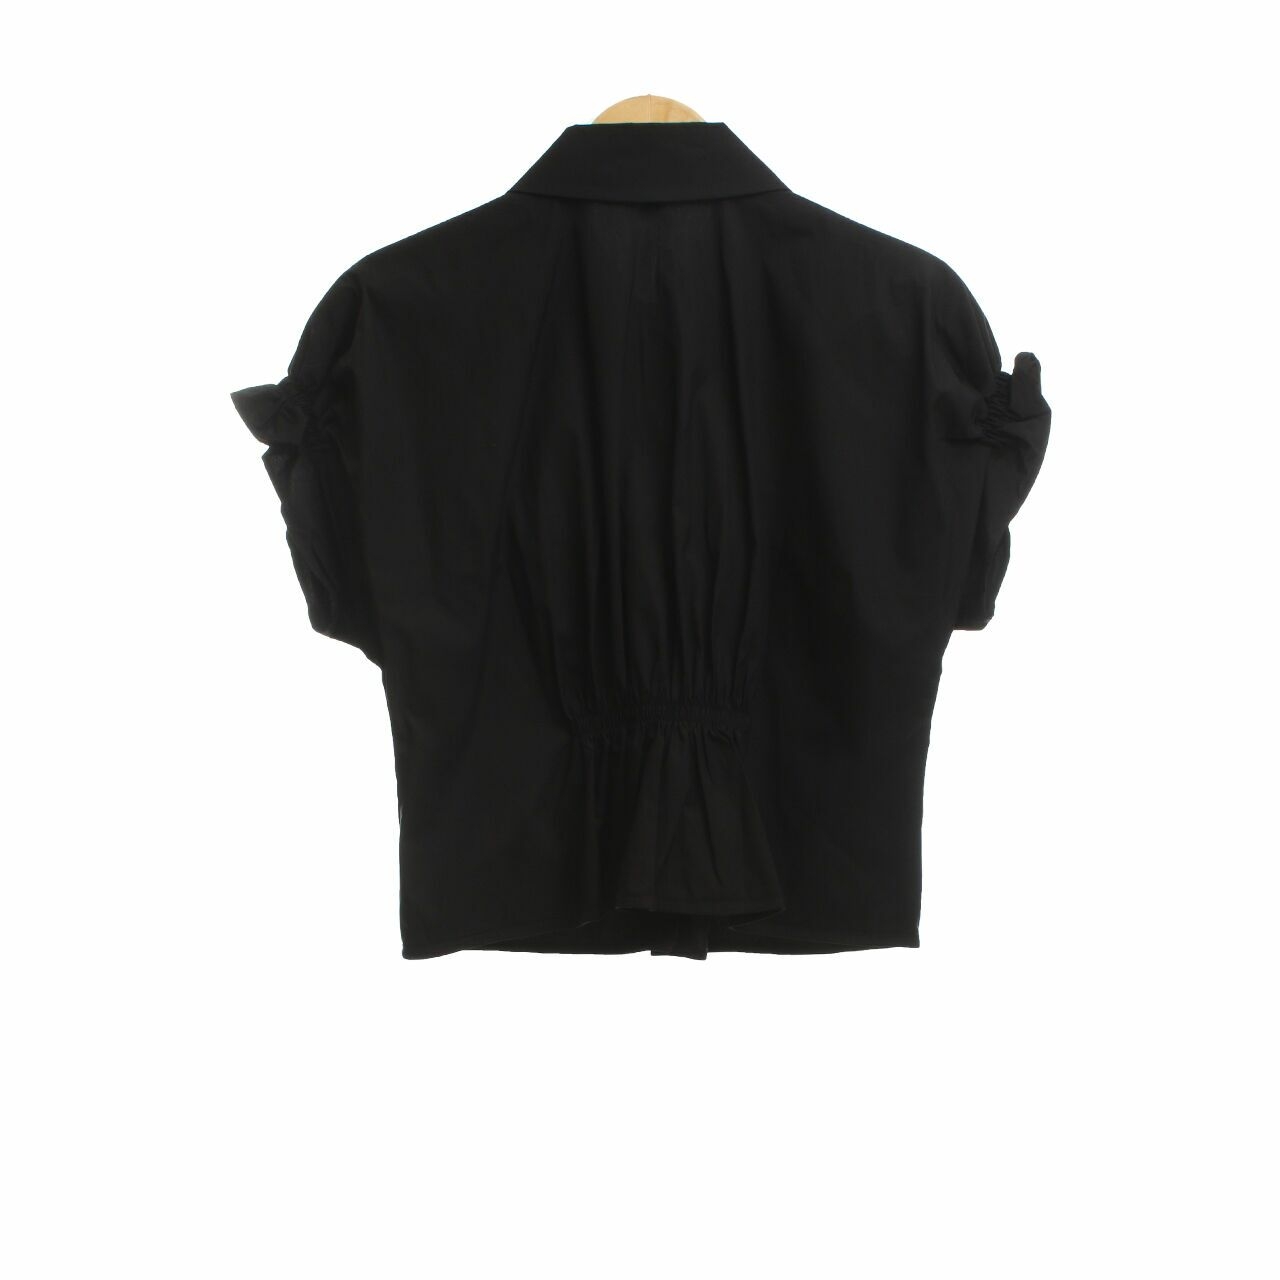 COS Black Shirt